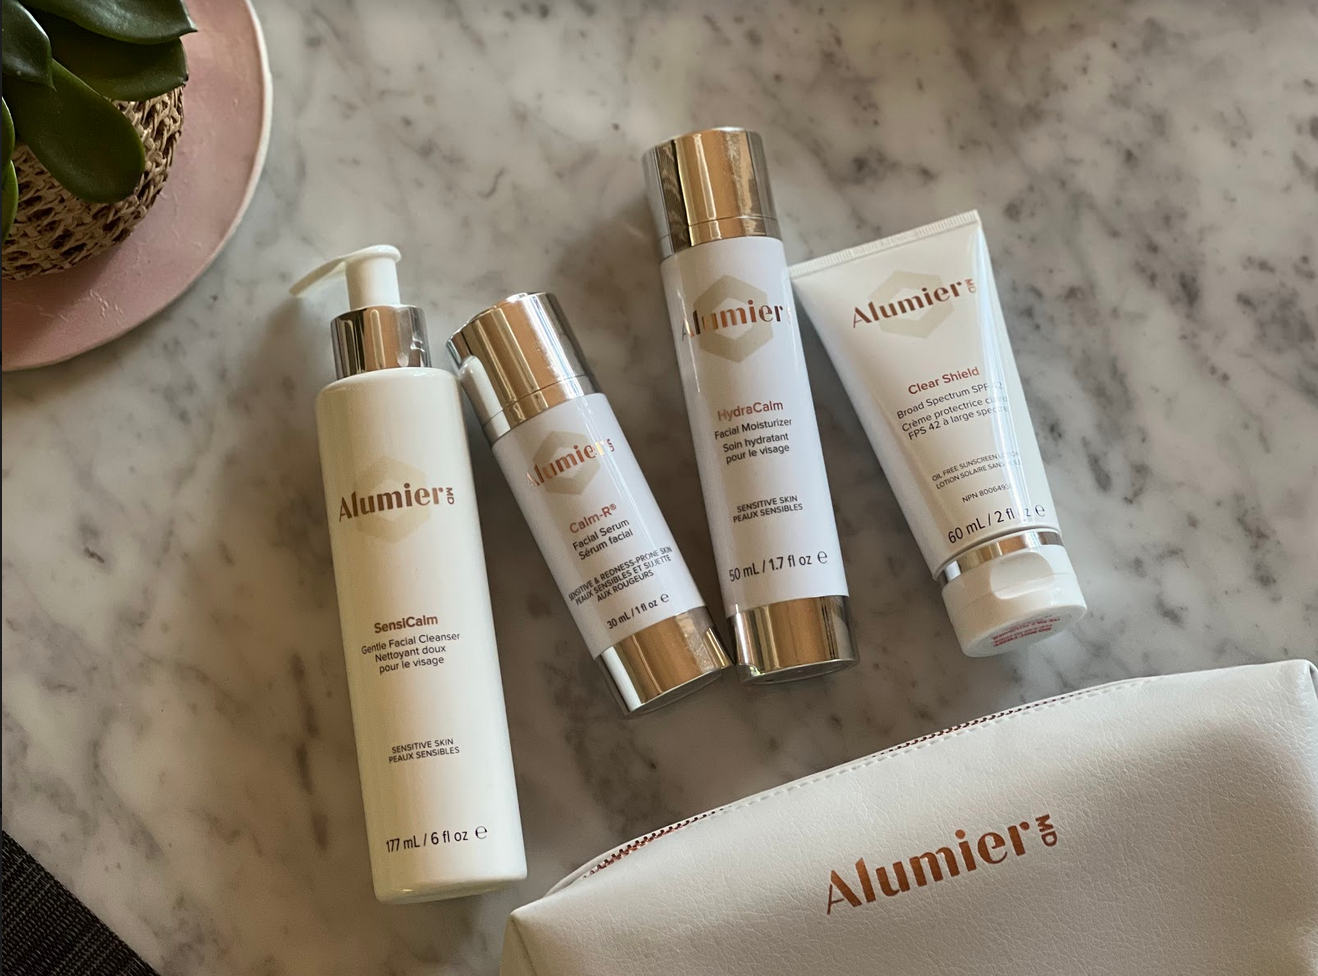 AlumierMD sensitive skincare collection